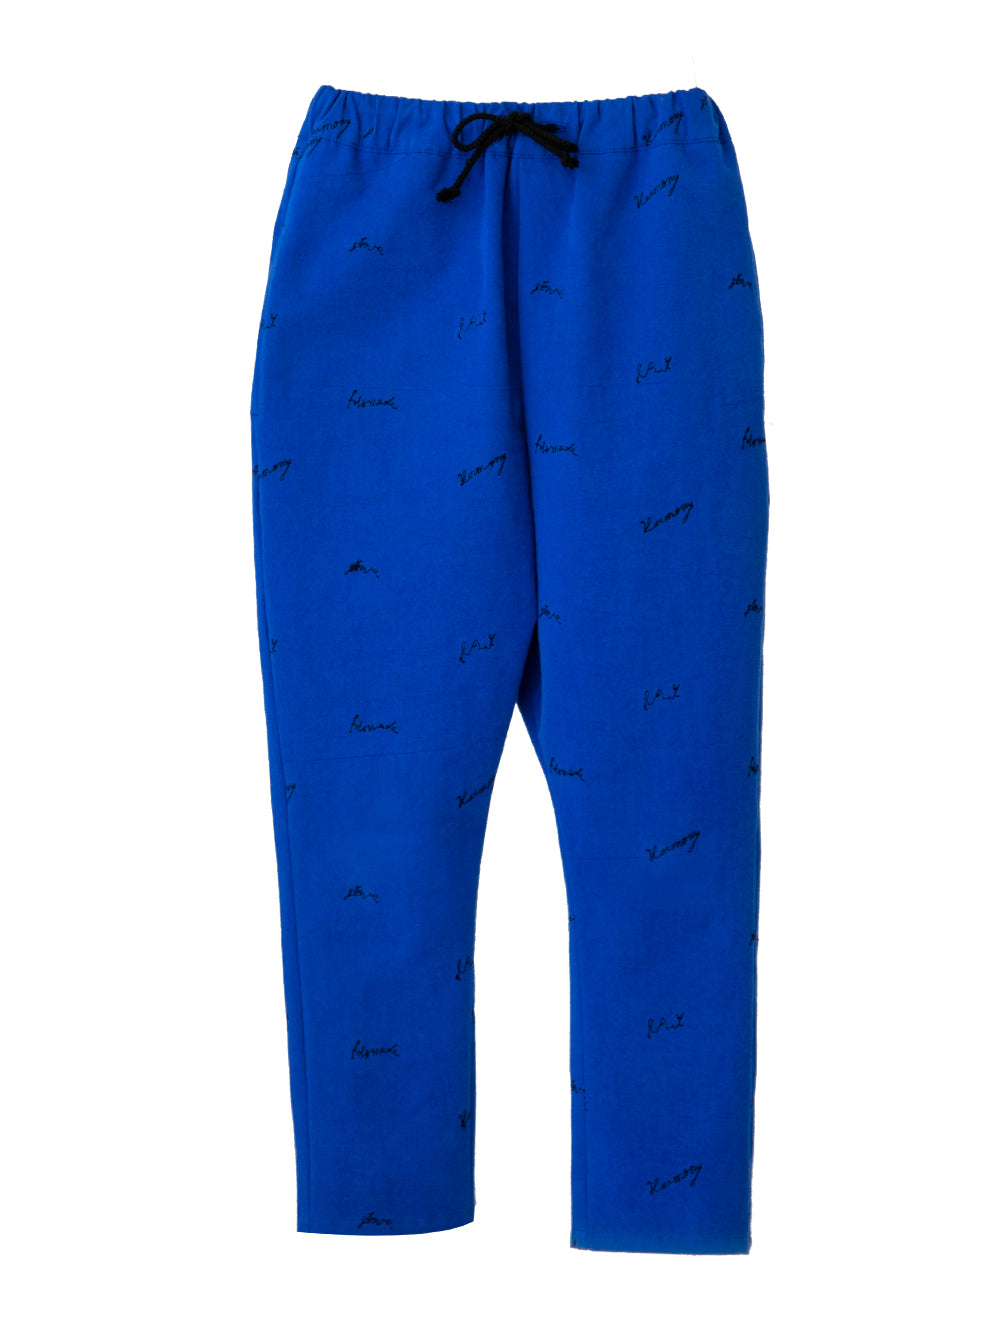 Blue Embroidery Jodhpurs Pants